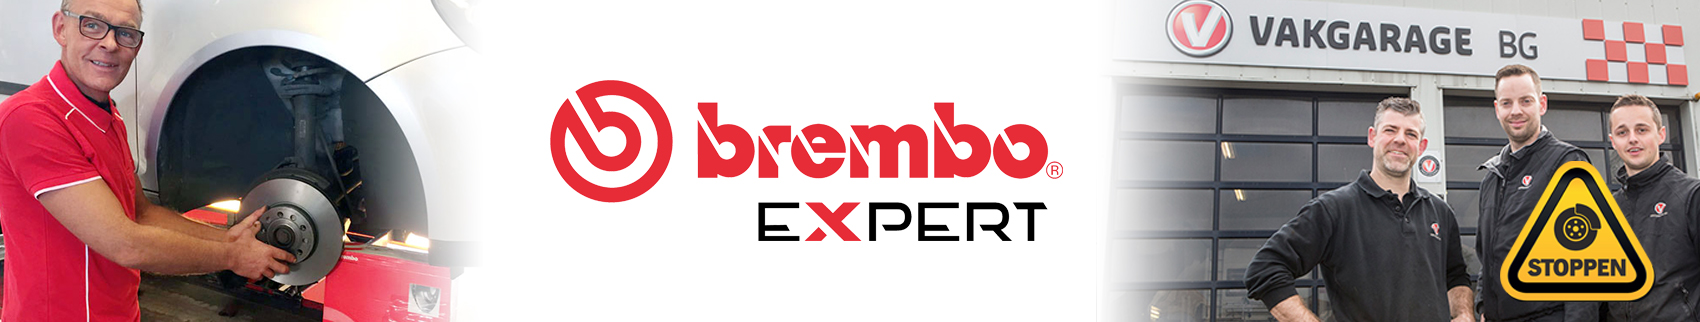 Brembo expert